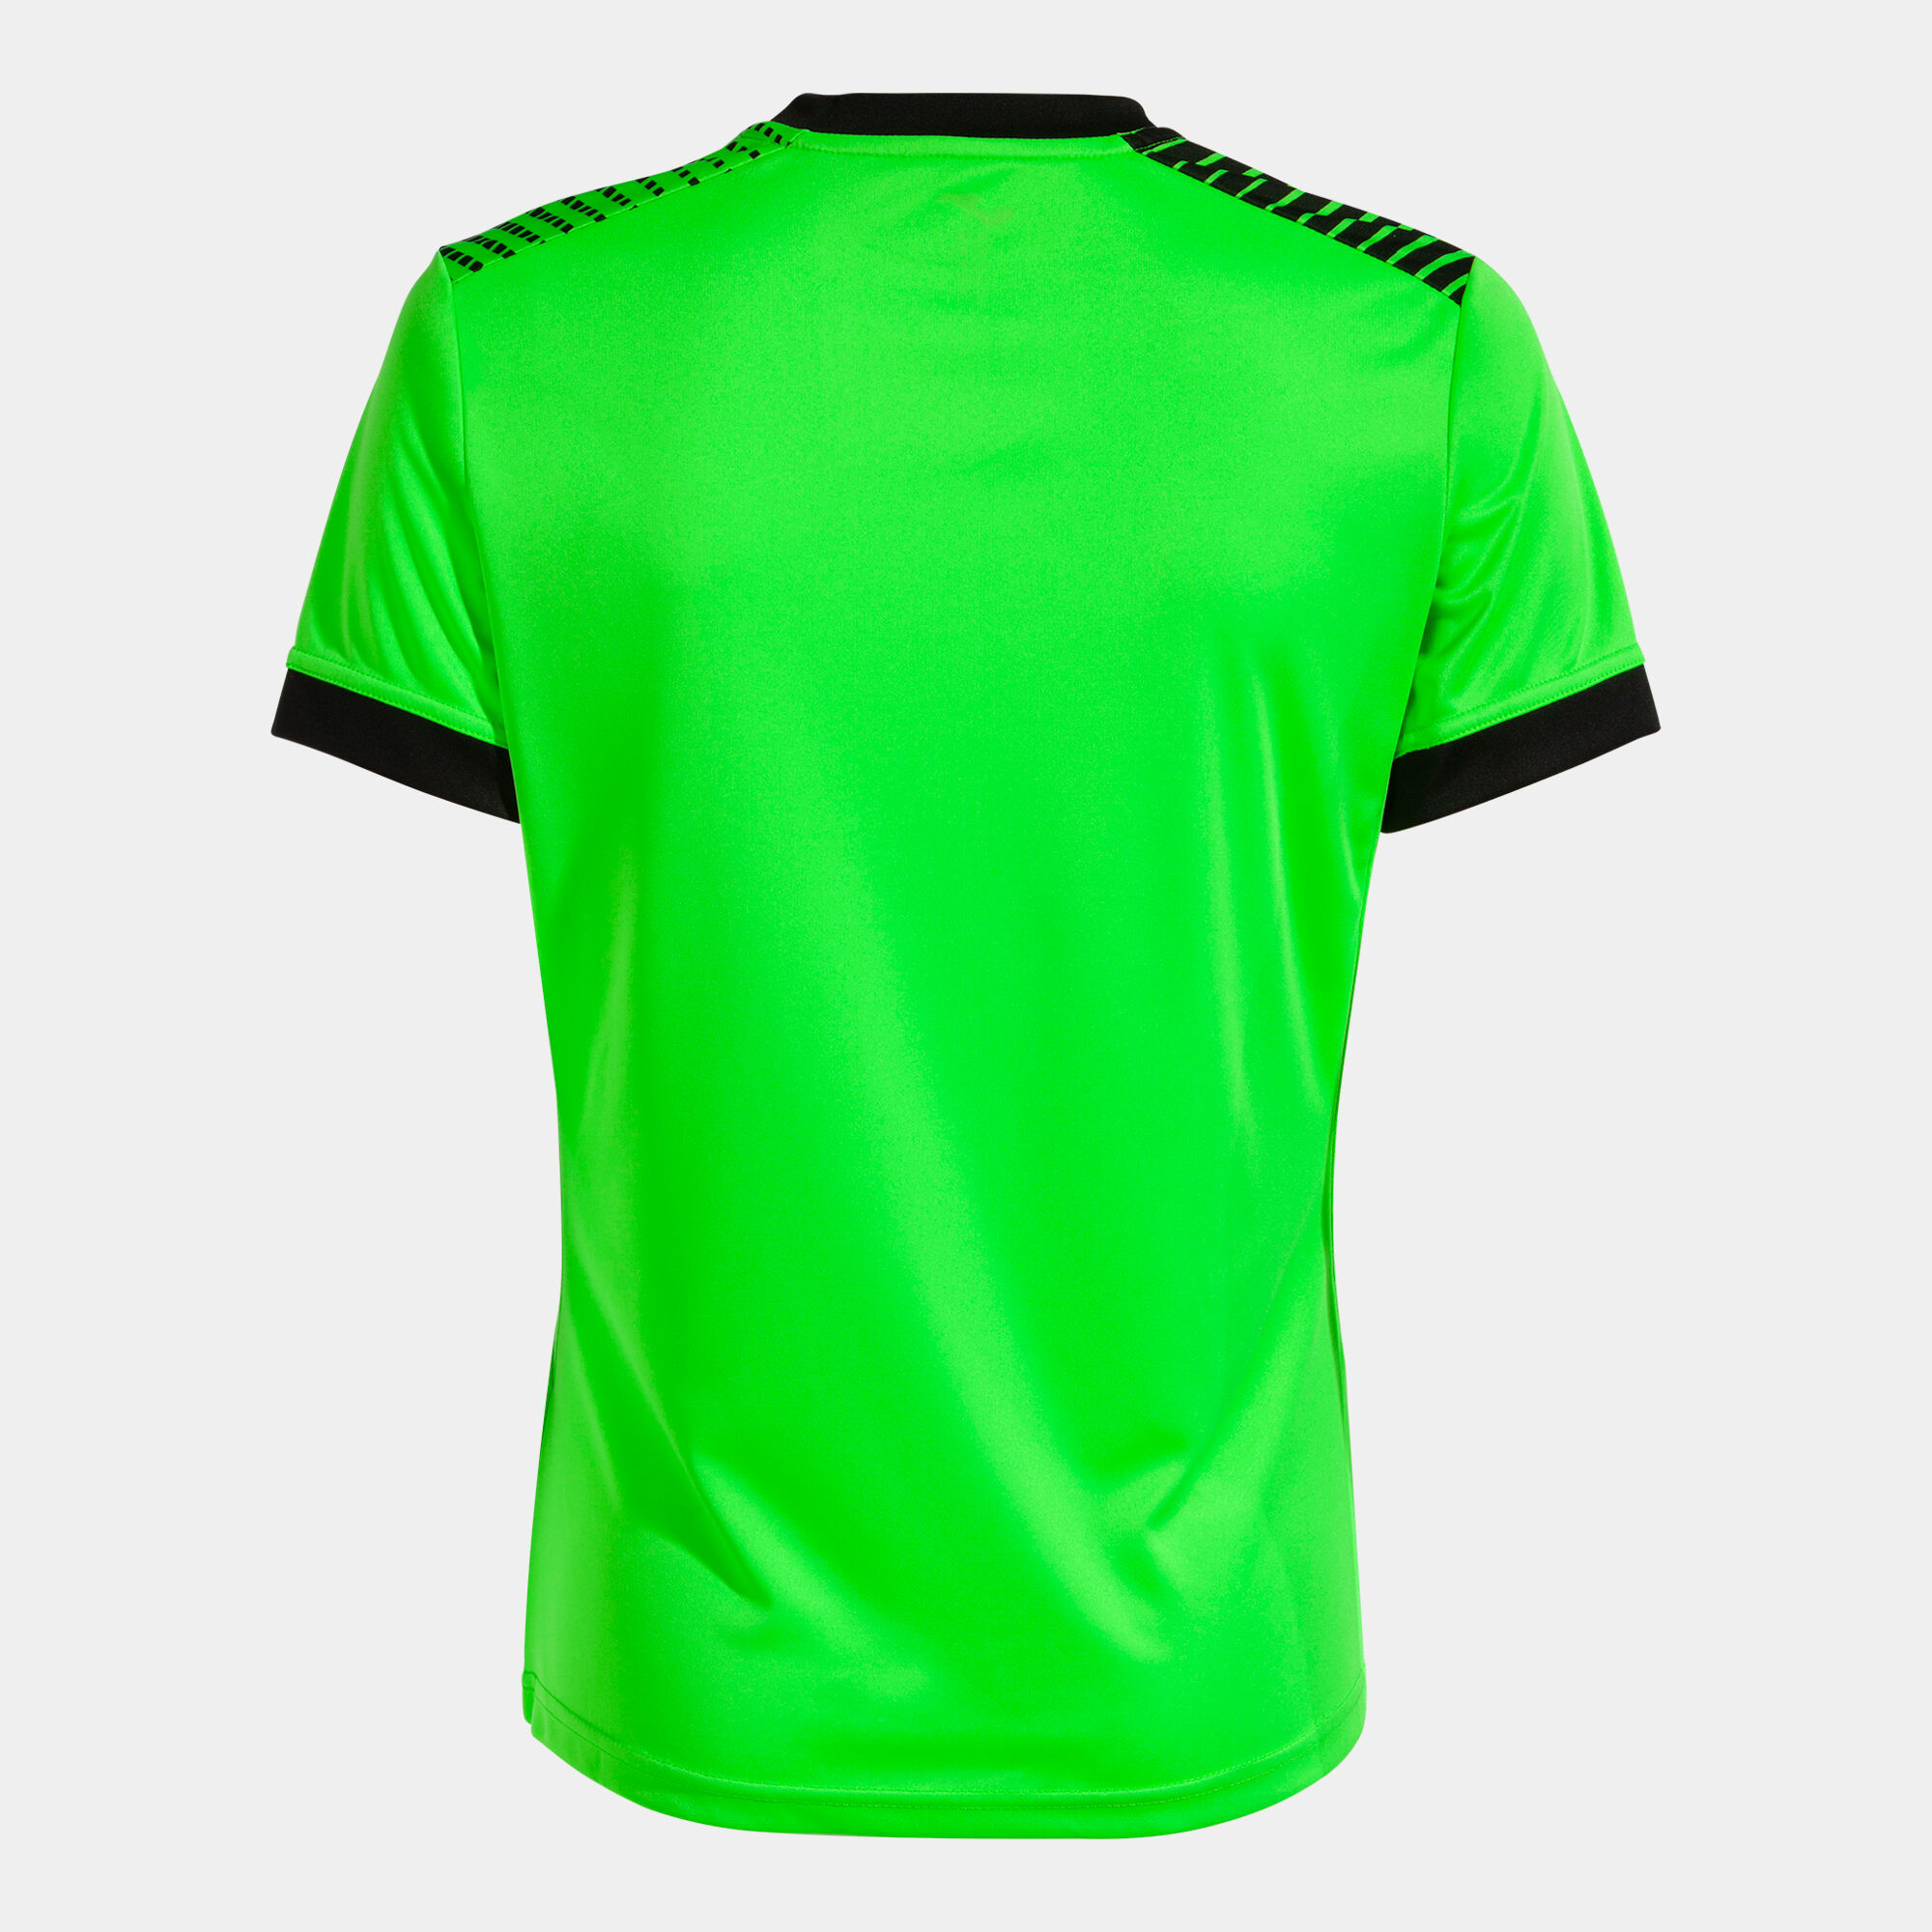 Camiseta manga corta mujer Eco Supernova verde flúor negro